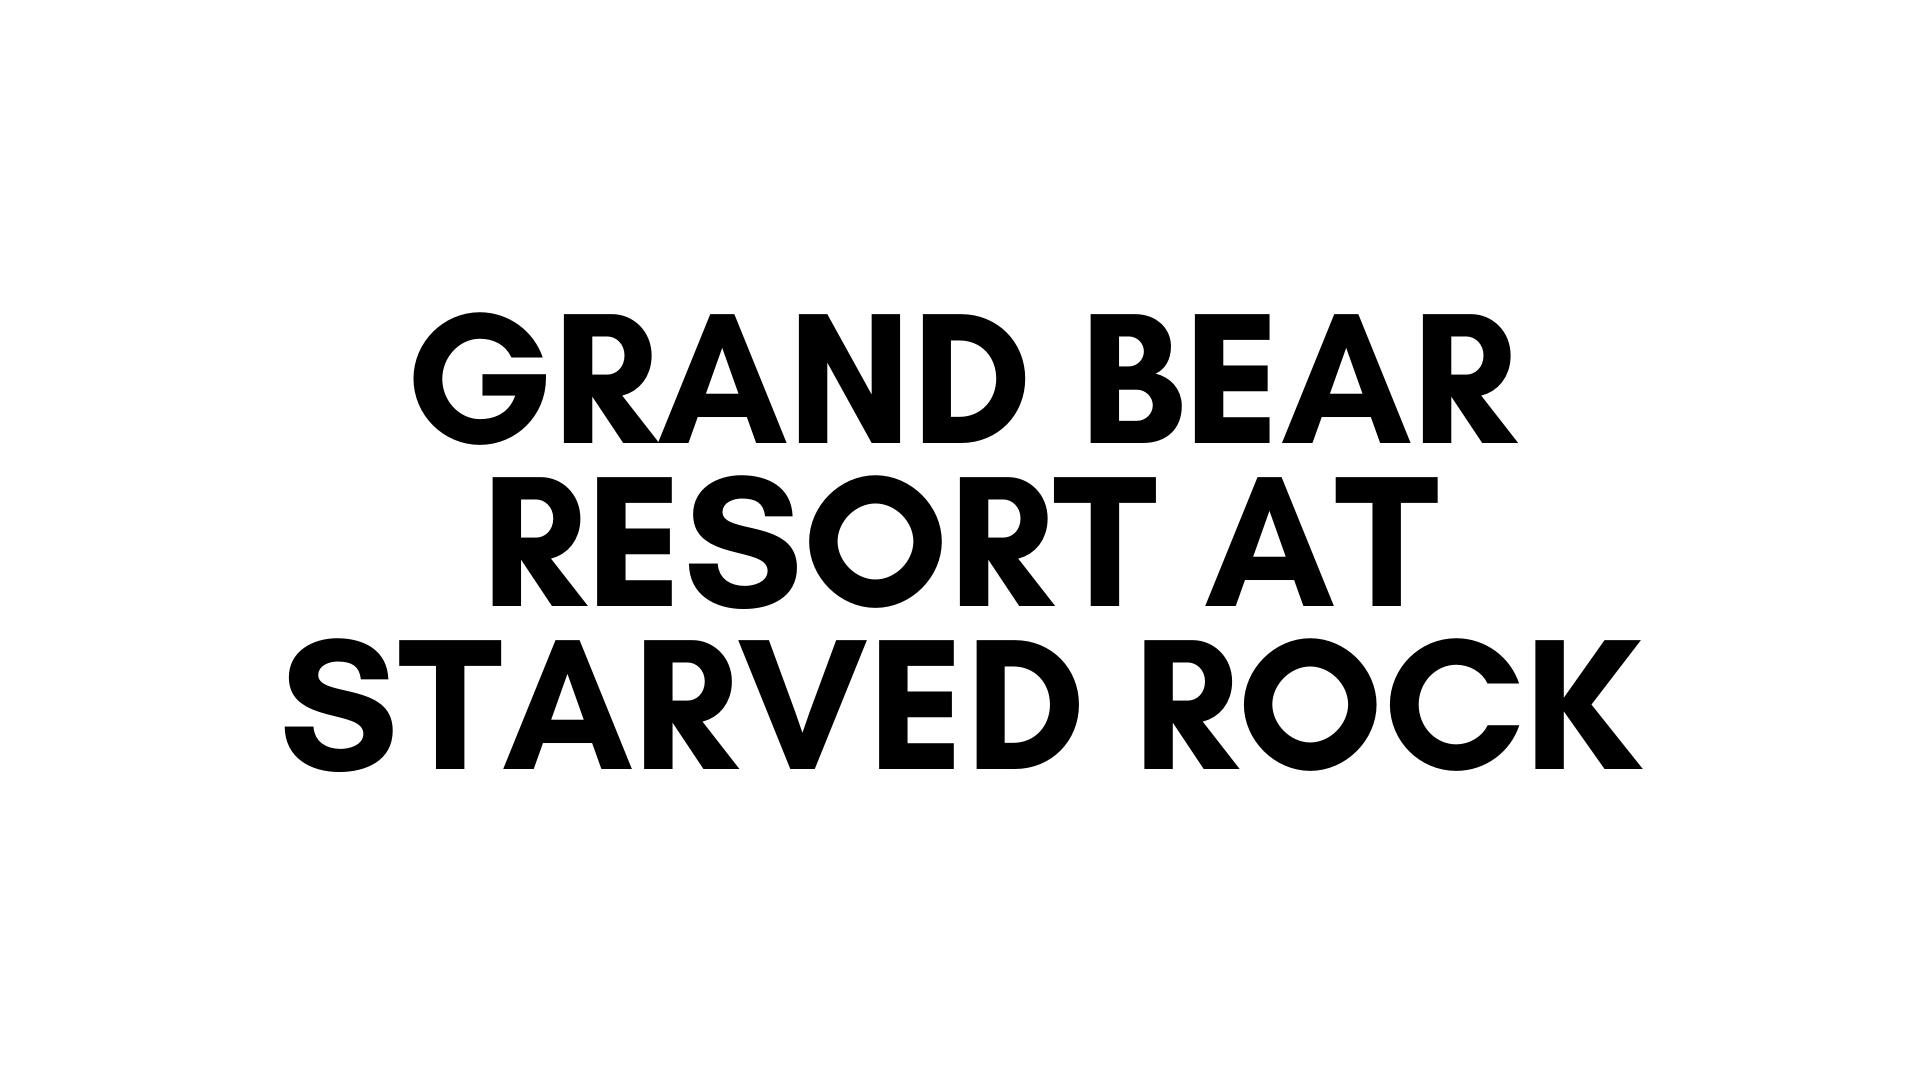 GRAND BEAR RESORT AT STARVED ROCK